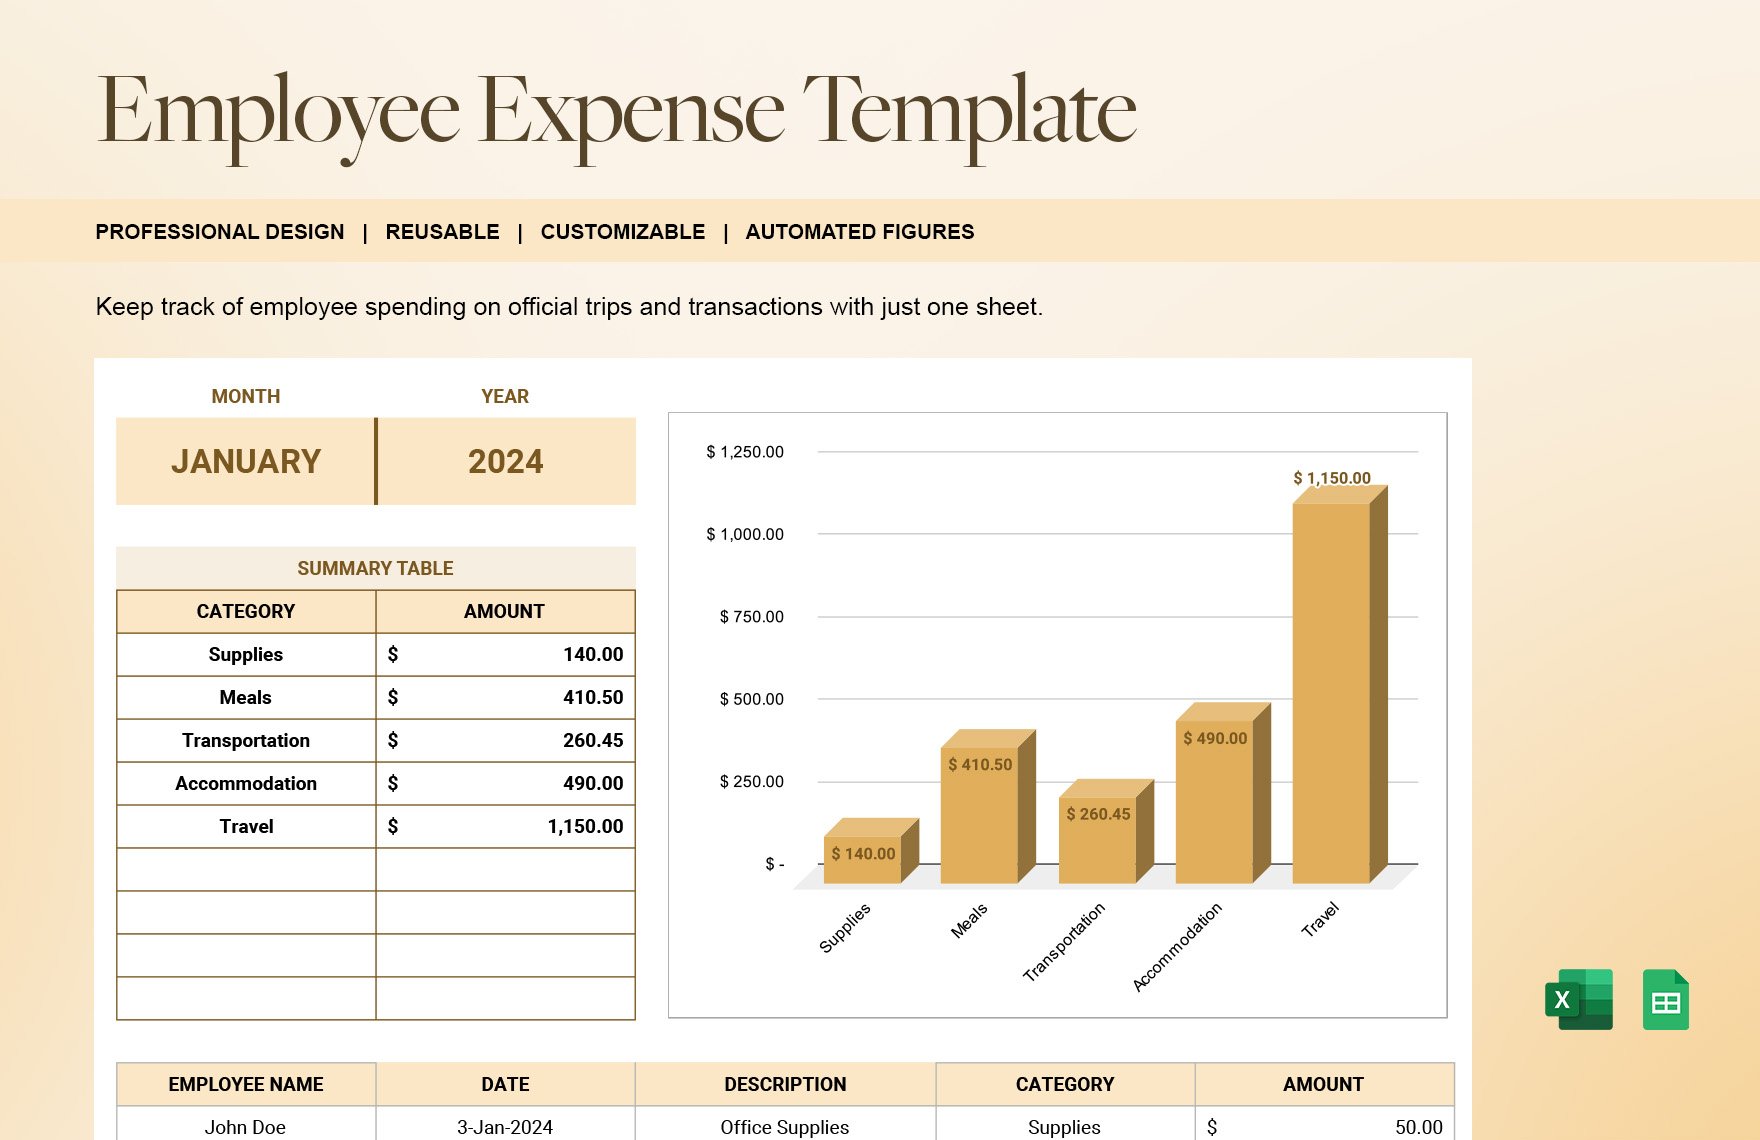 Employee Expense Template